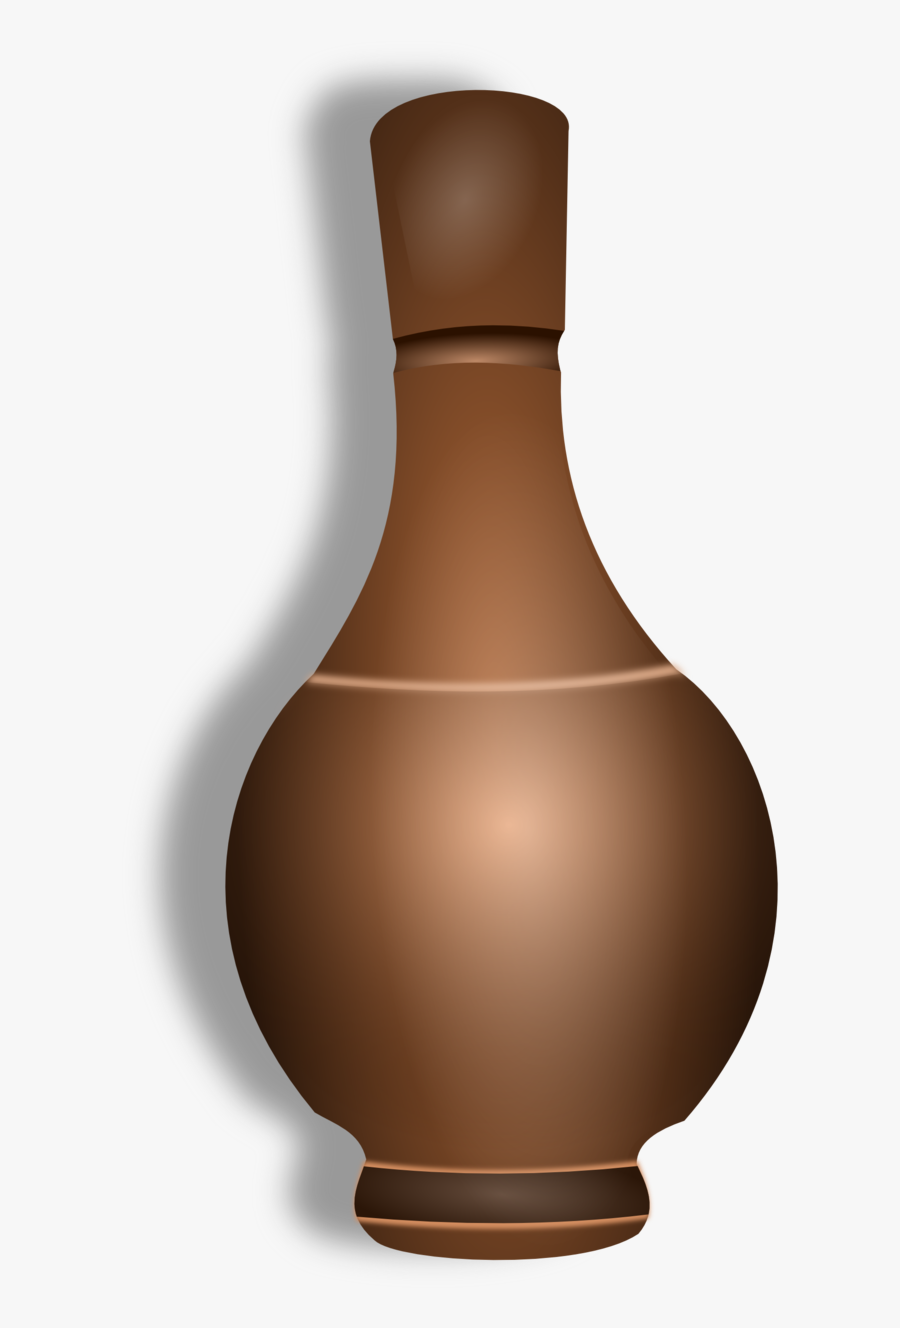 Vase Clip Art Download - Transparent Tall Vase Clipart, Transparent Clipart